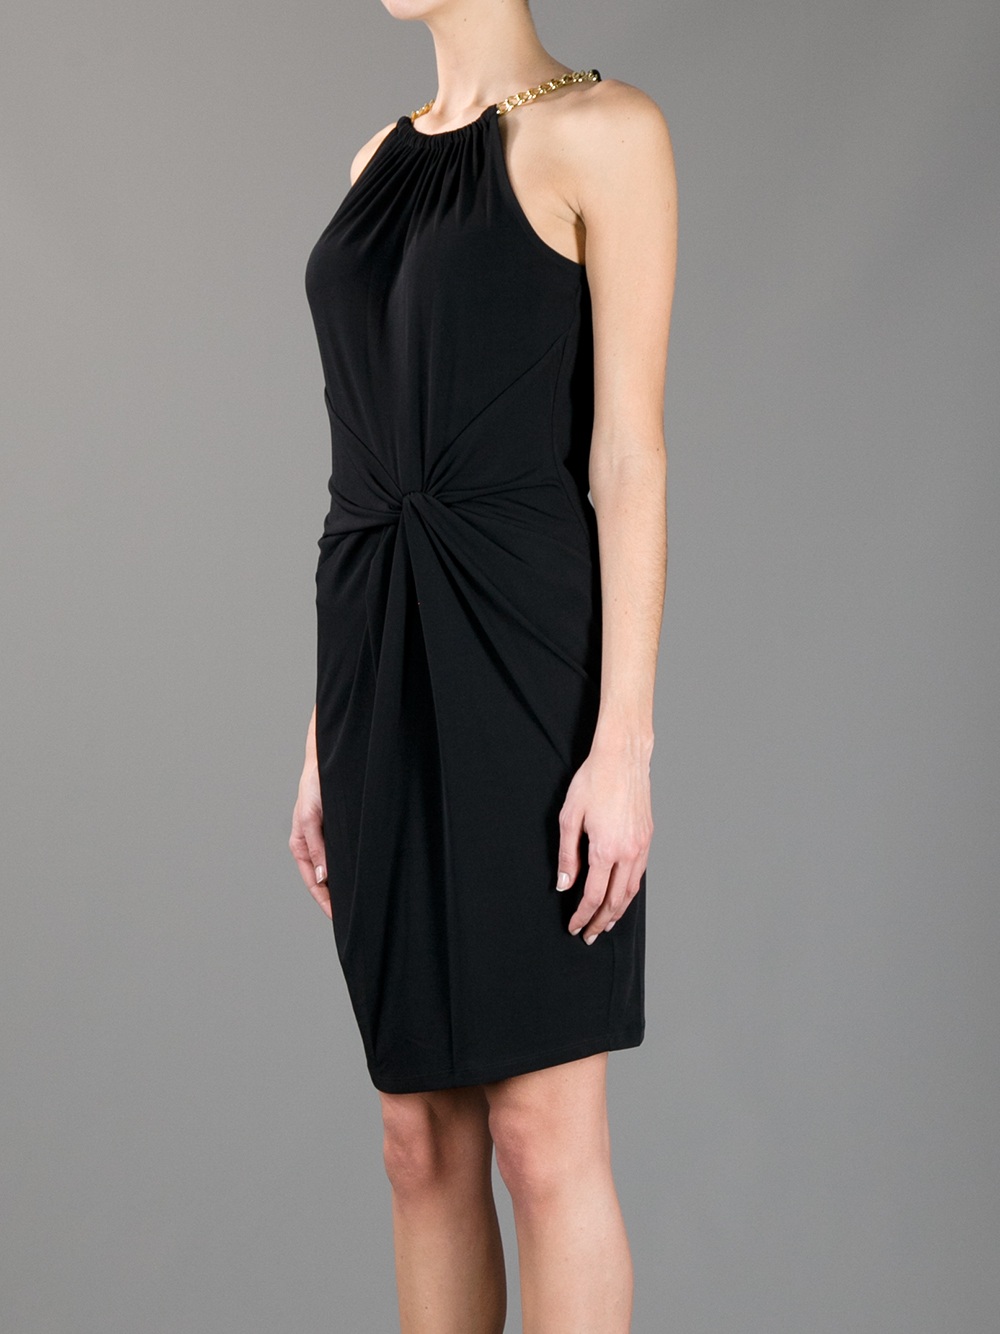 Michael Kors Formal Dresses & Evening Gowns - Women | FASHIOLA.com